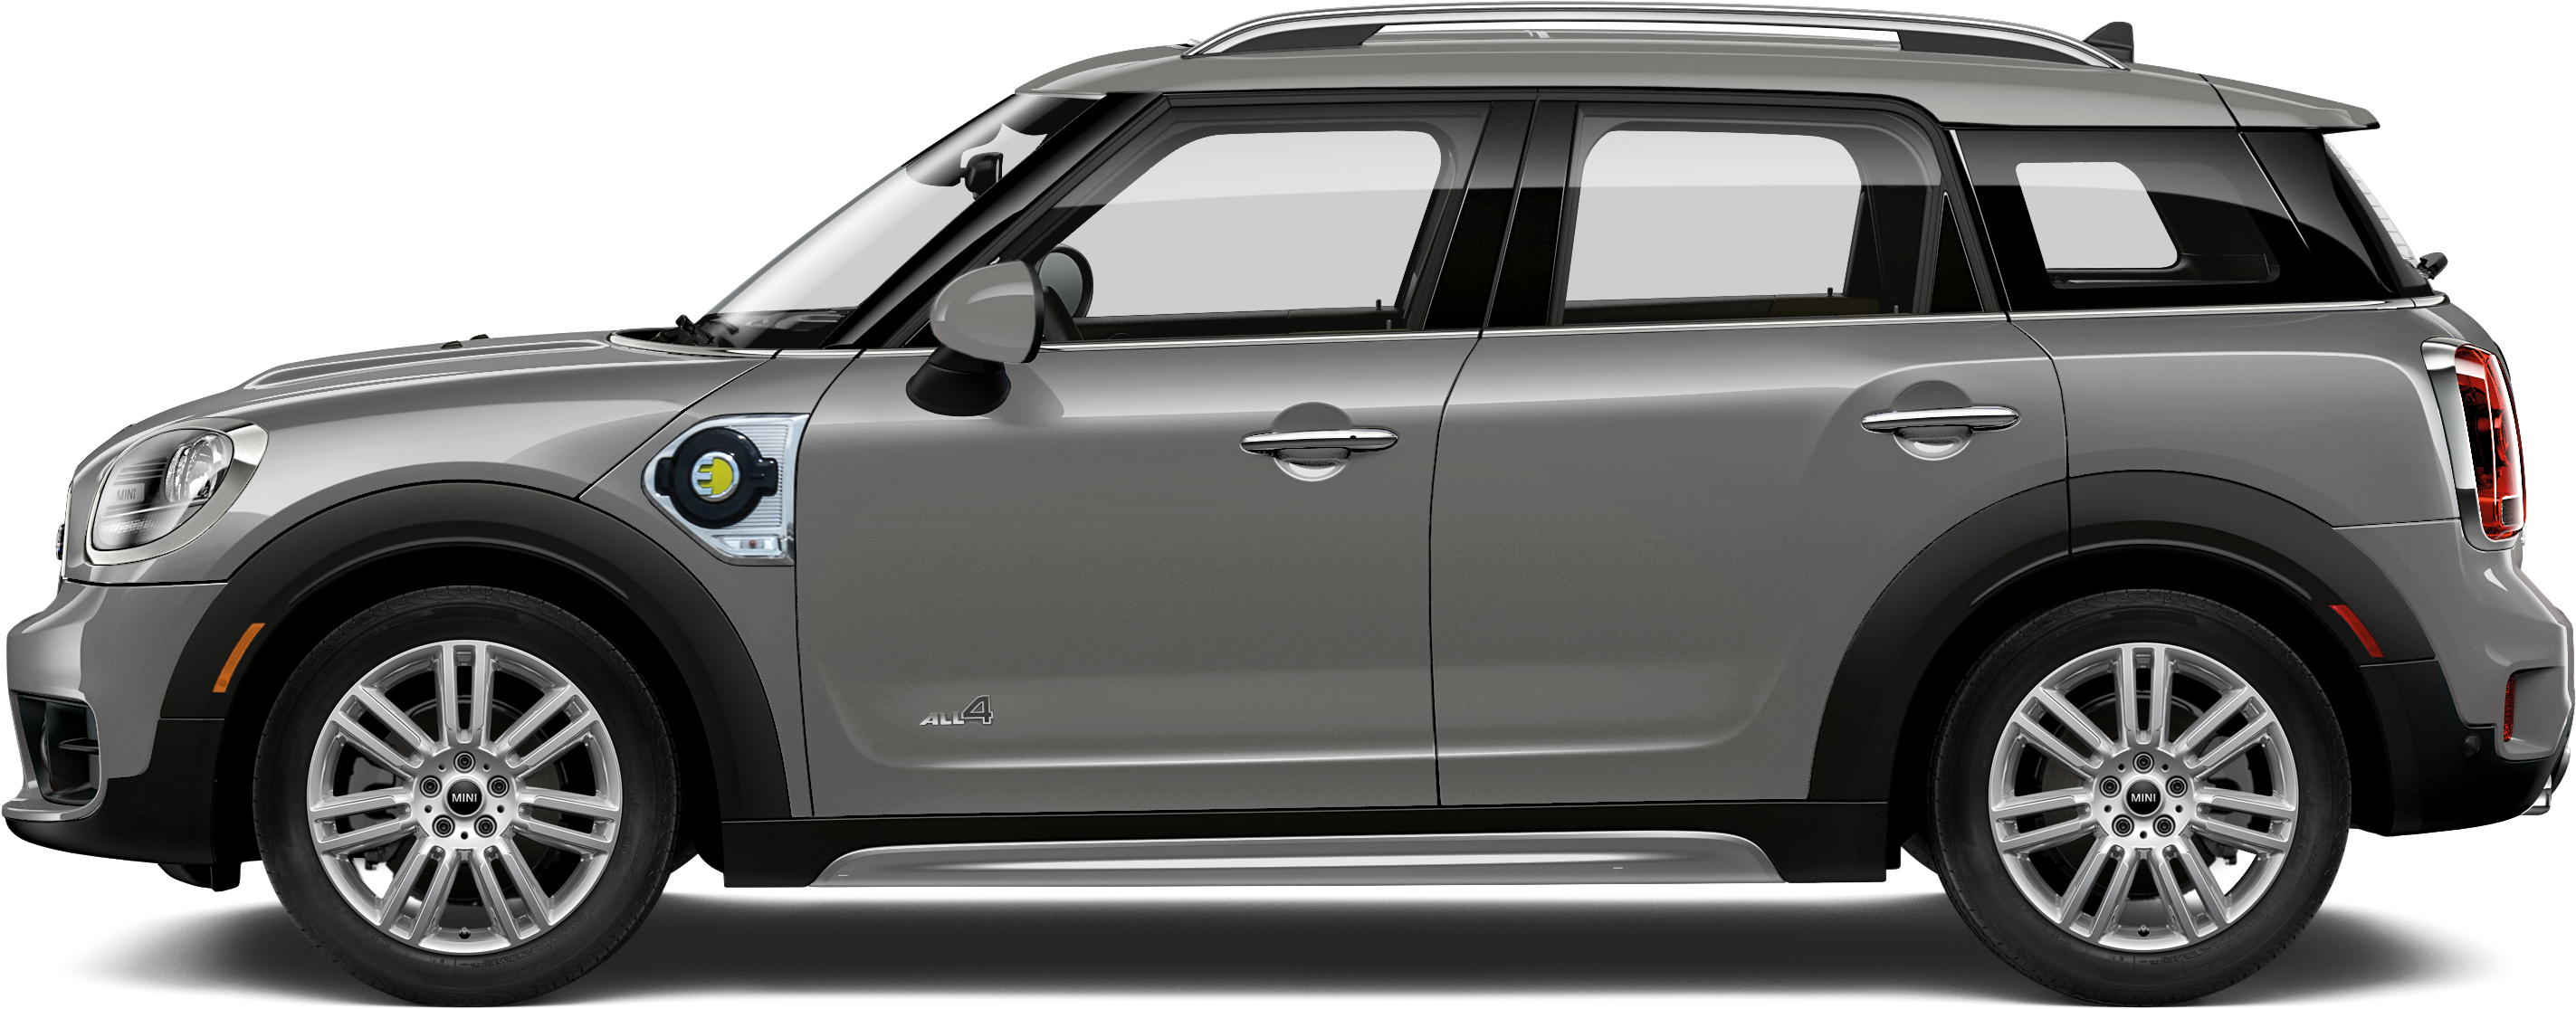 Cooper S E - 2016 Gray Hyundai Elantra Hatchback (3508x2339), Png Download